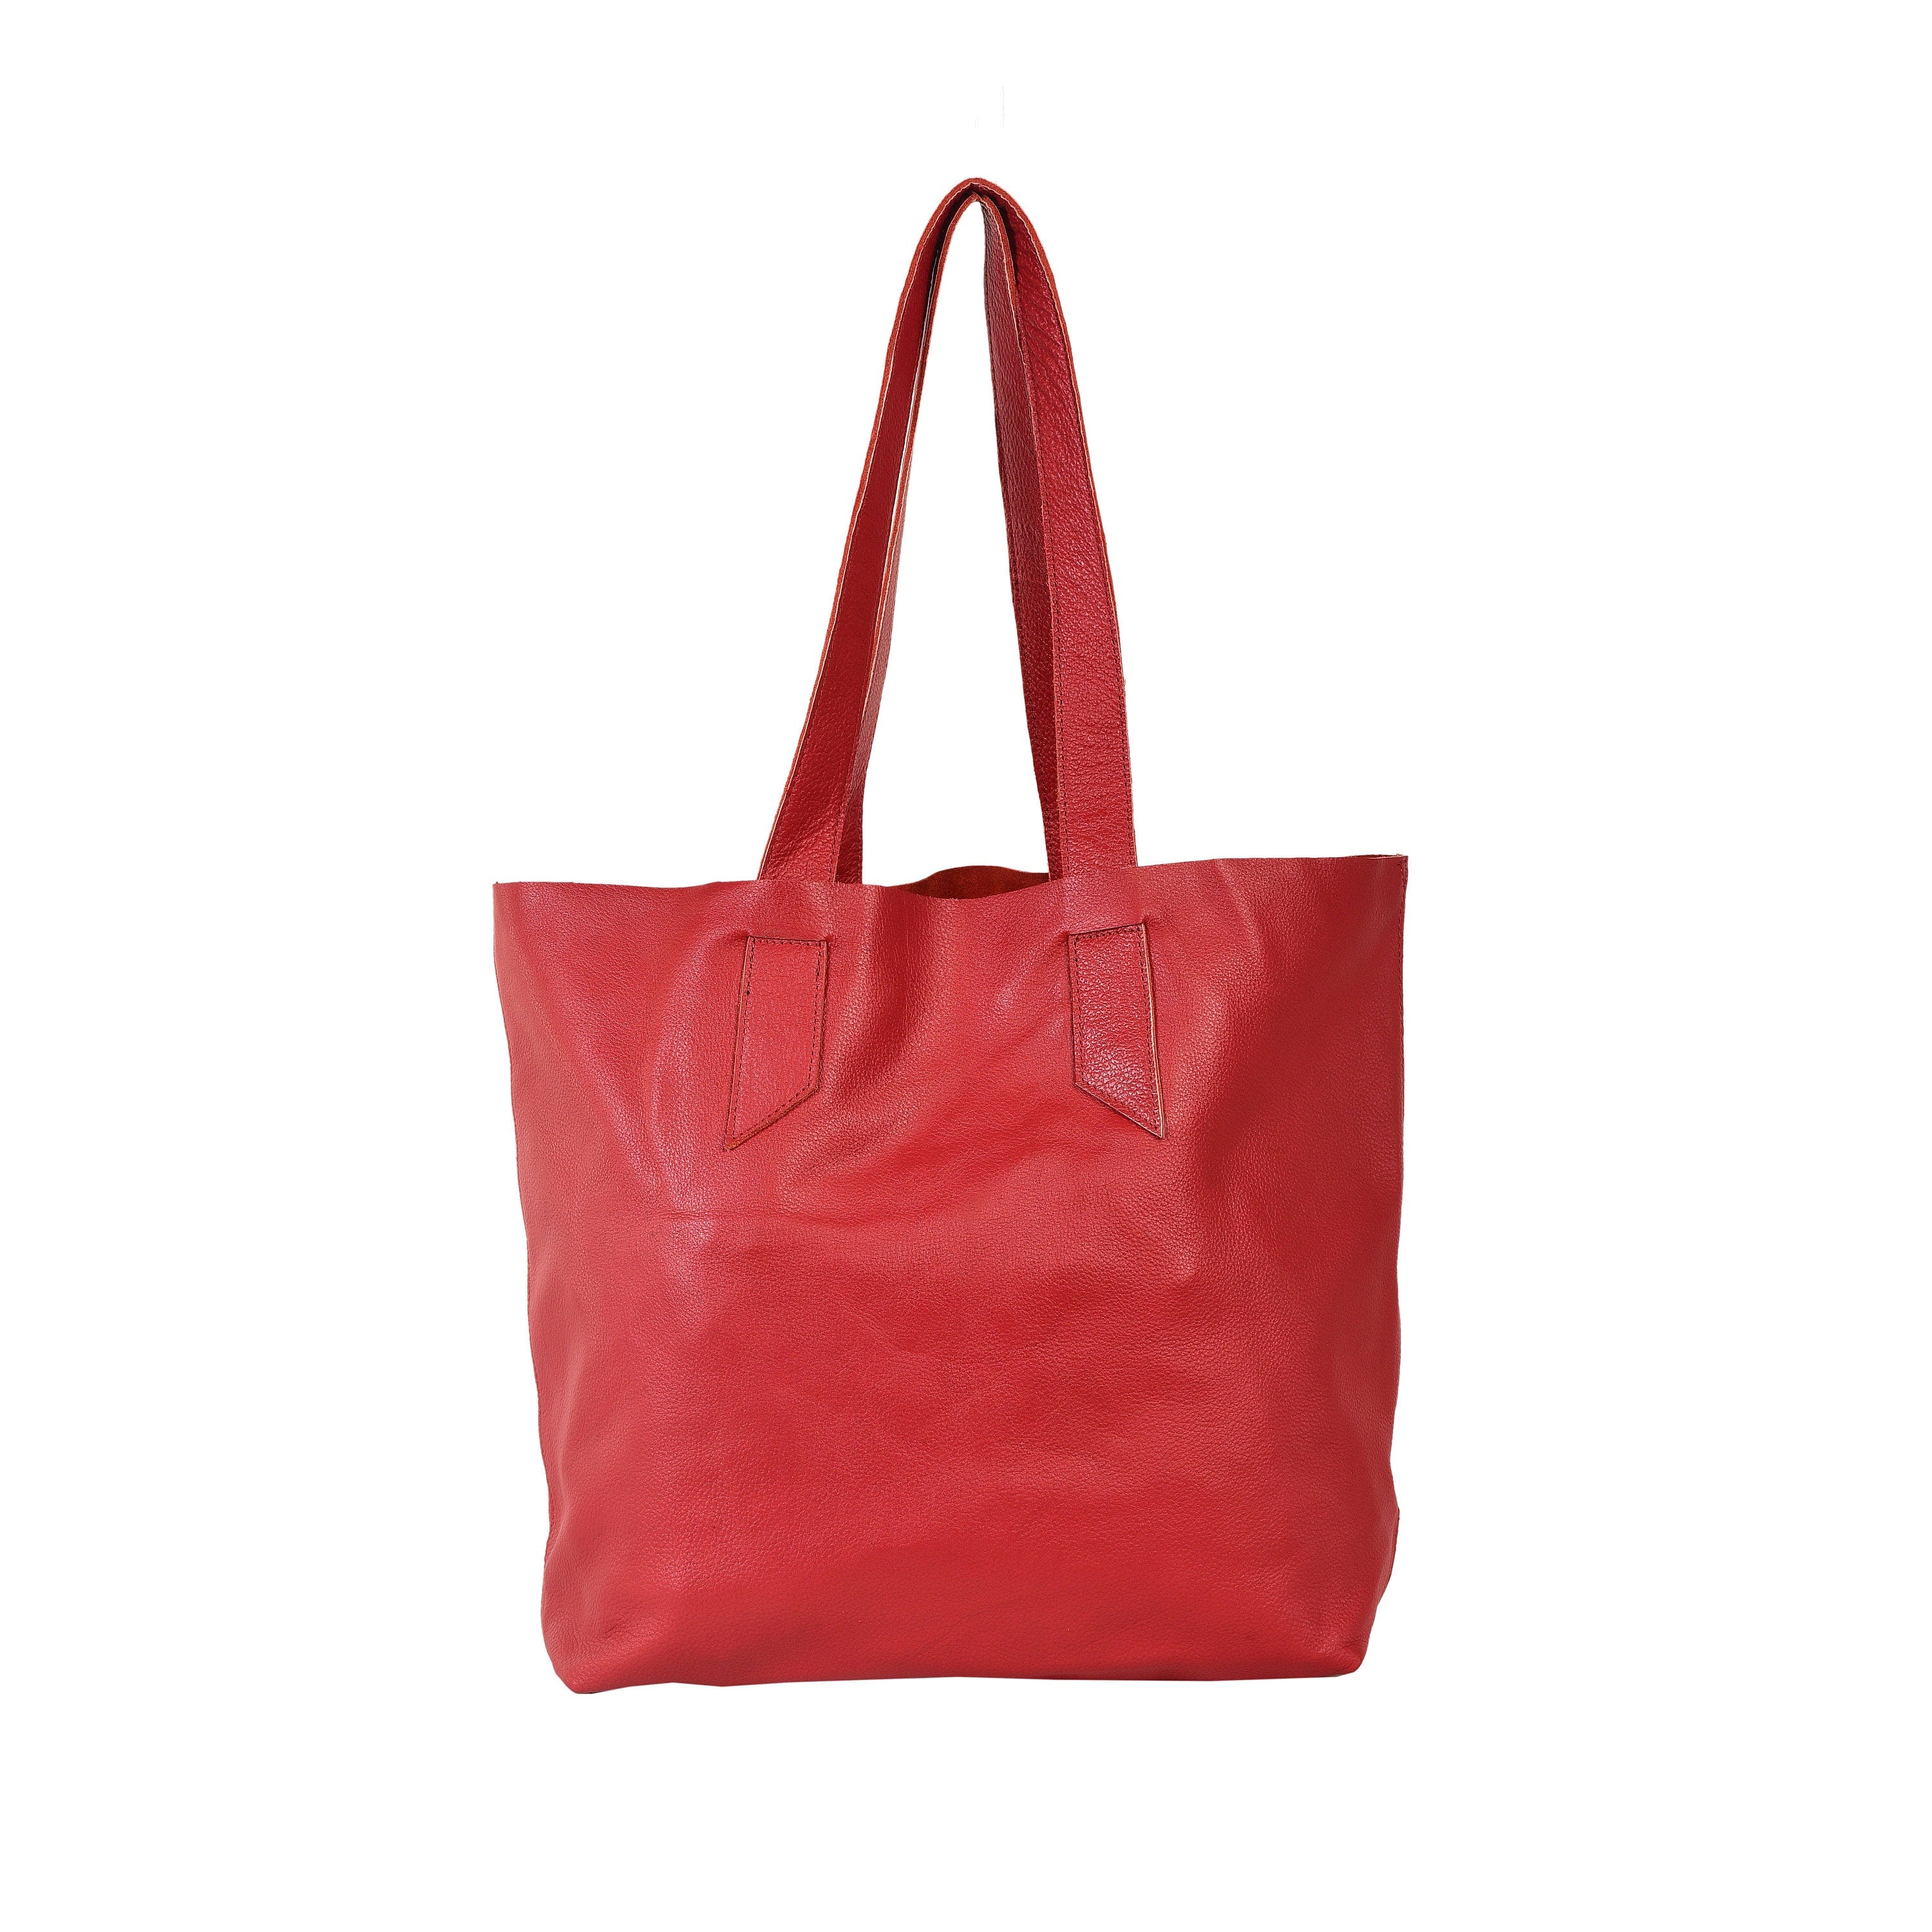 Buy Lavie Women's Watta Large Tote Bag Red Ladies Purse Handbag at Amazon.in